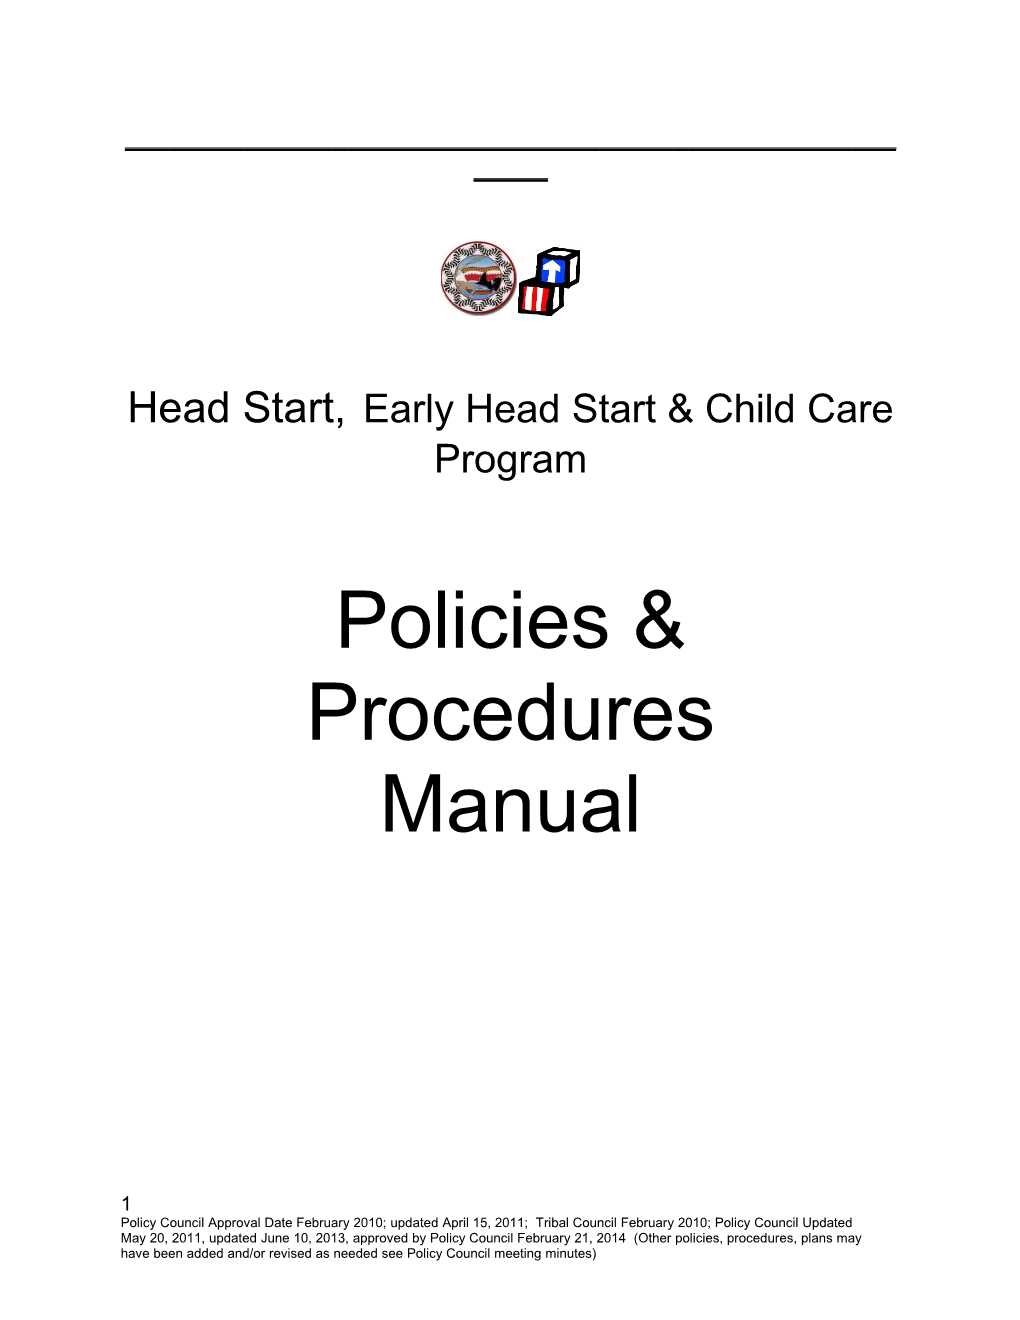 Yurok Tribe Head Start/Early Head Start & Child Care Policies/Procedures